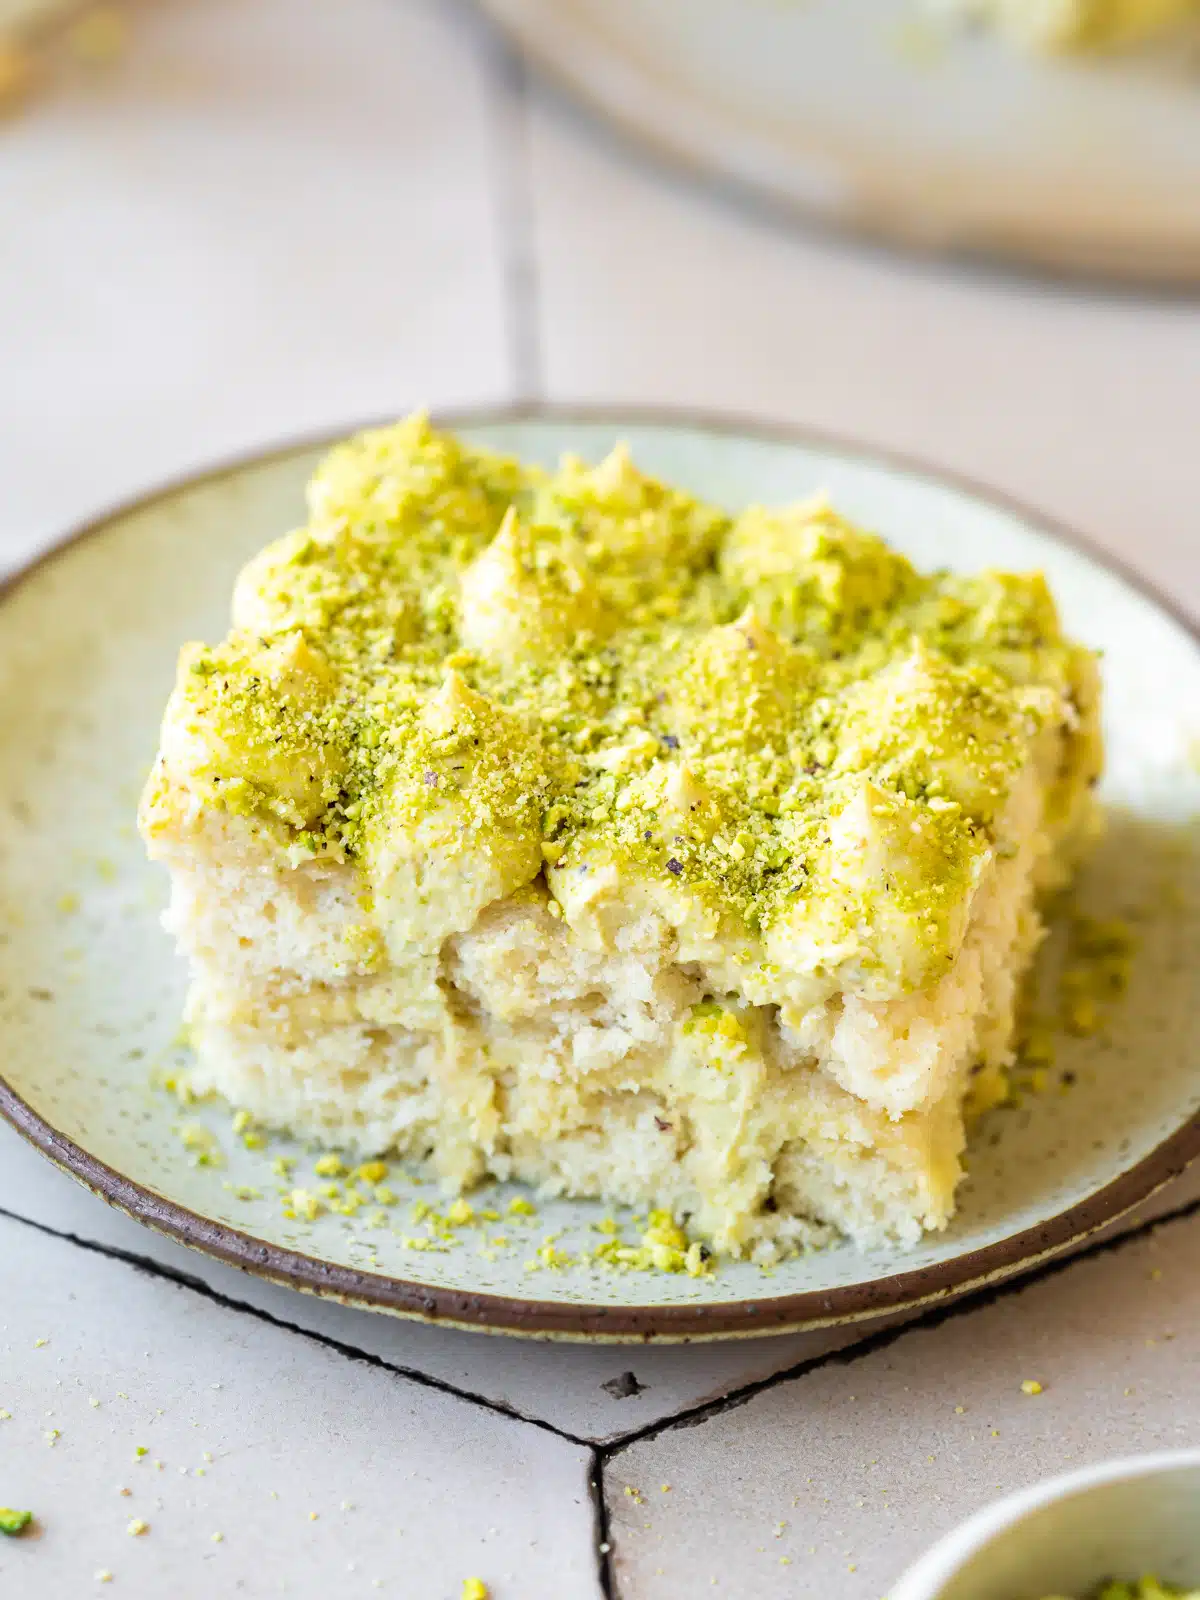 a slice of pistachio tiramisu on a ceramic plate with bright green pistachio pieces on top.